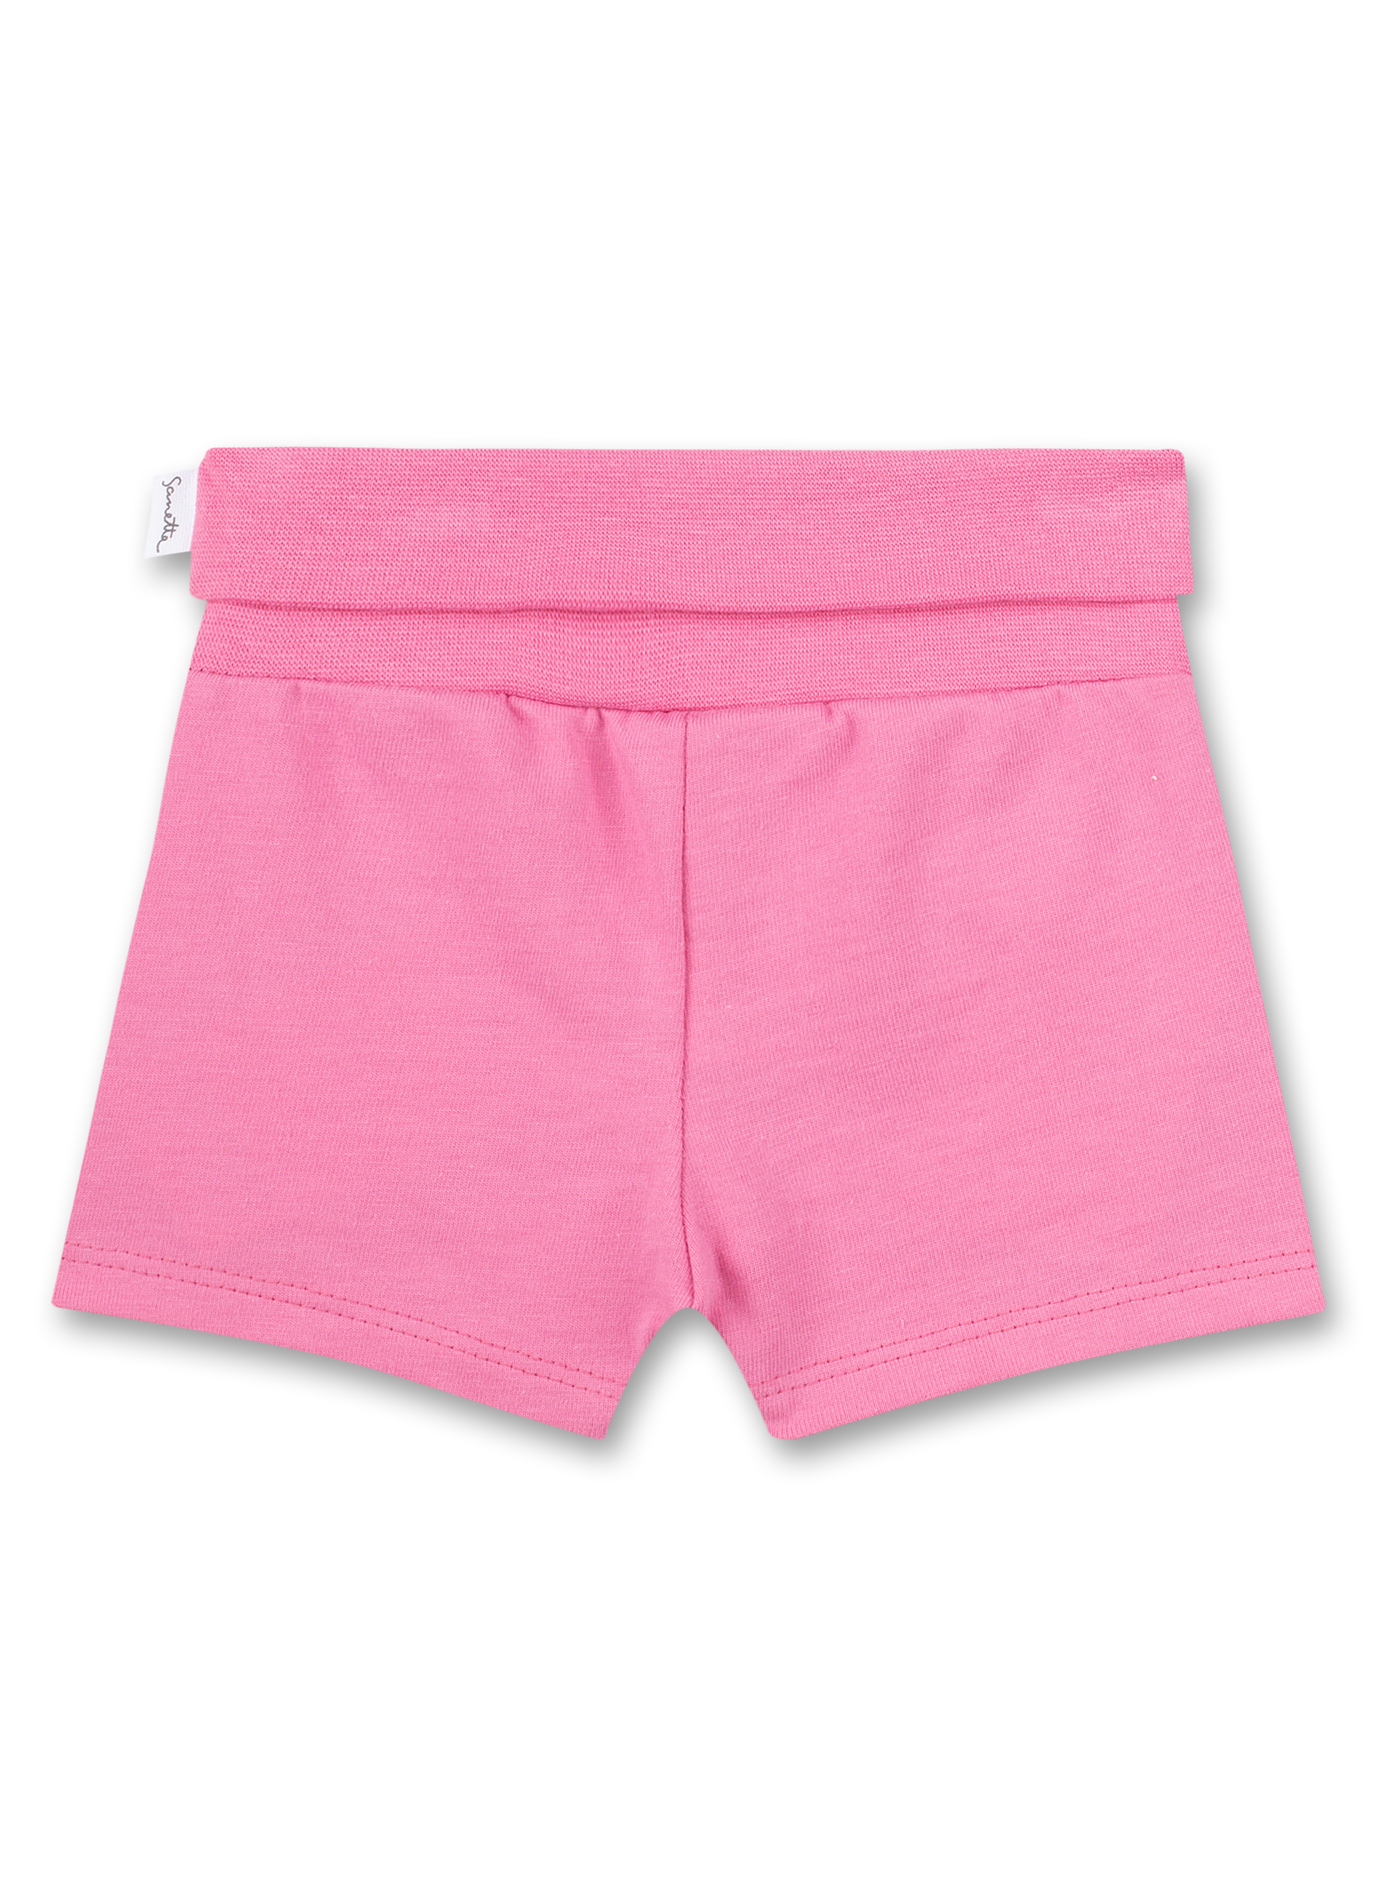 Mädchen-Shorts Pink